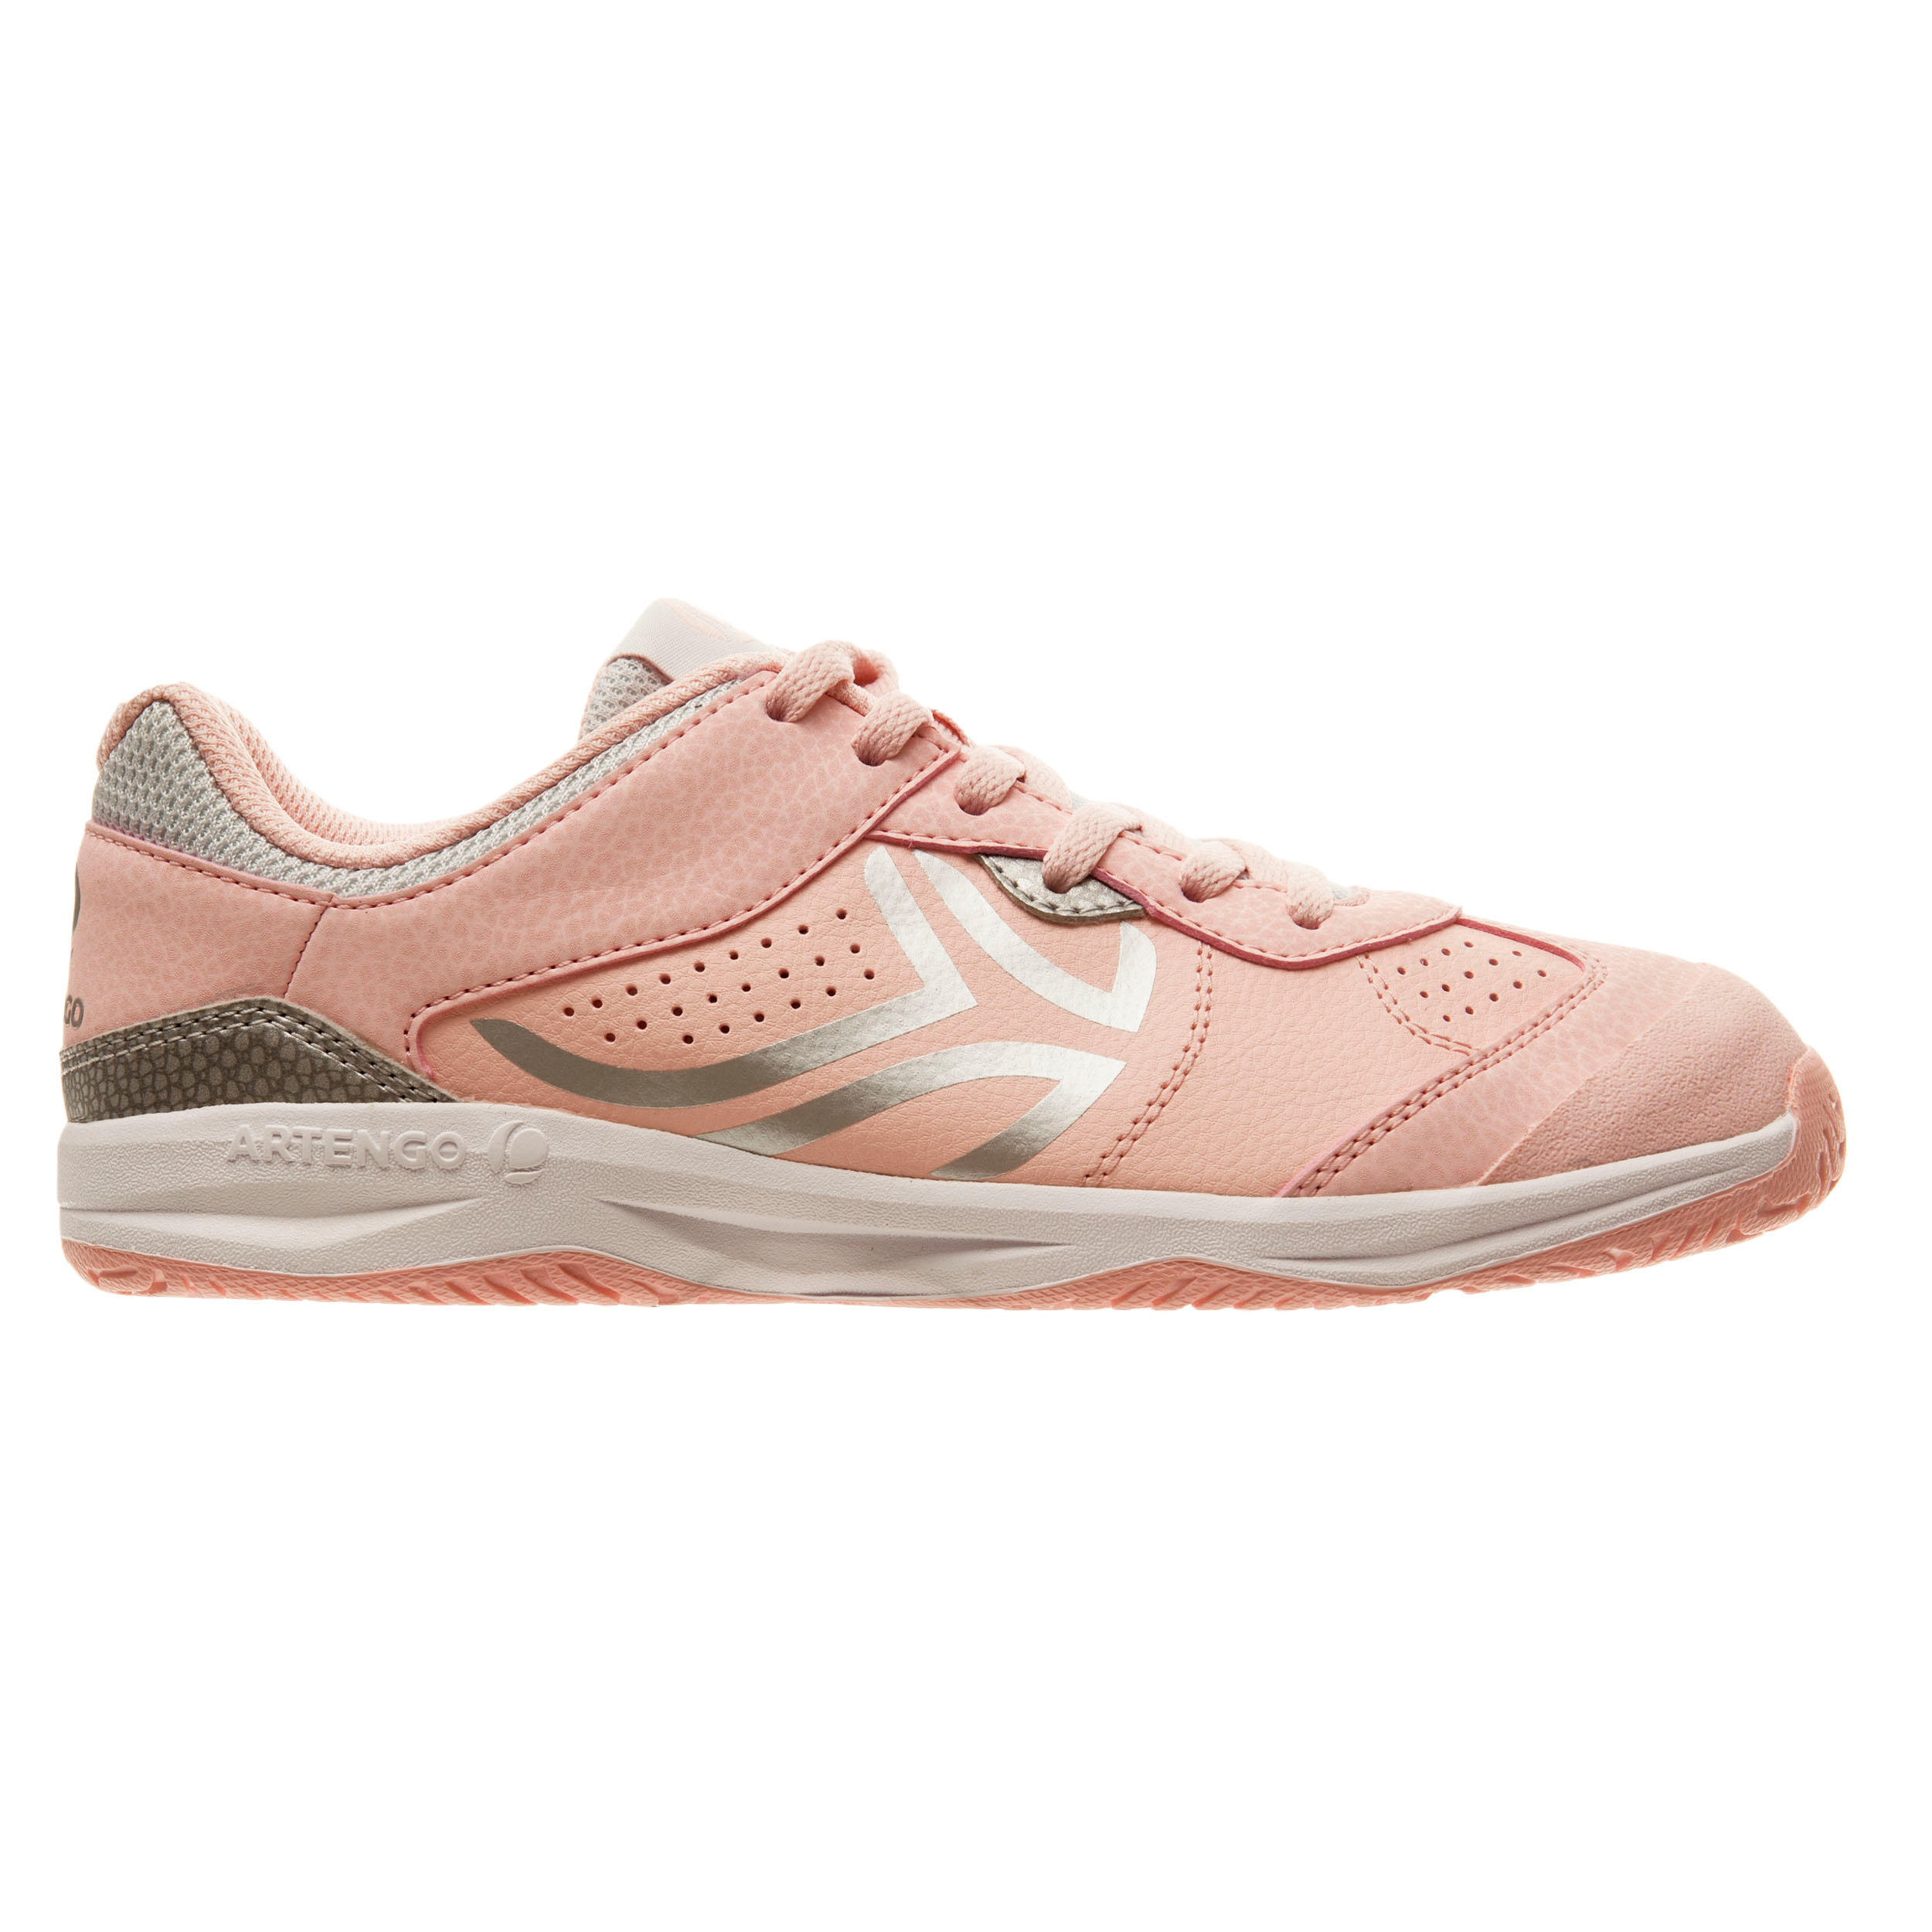 ARTENGO TS760 Kids' Lace-Up Tennis Shoes - Pink